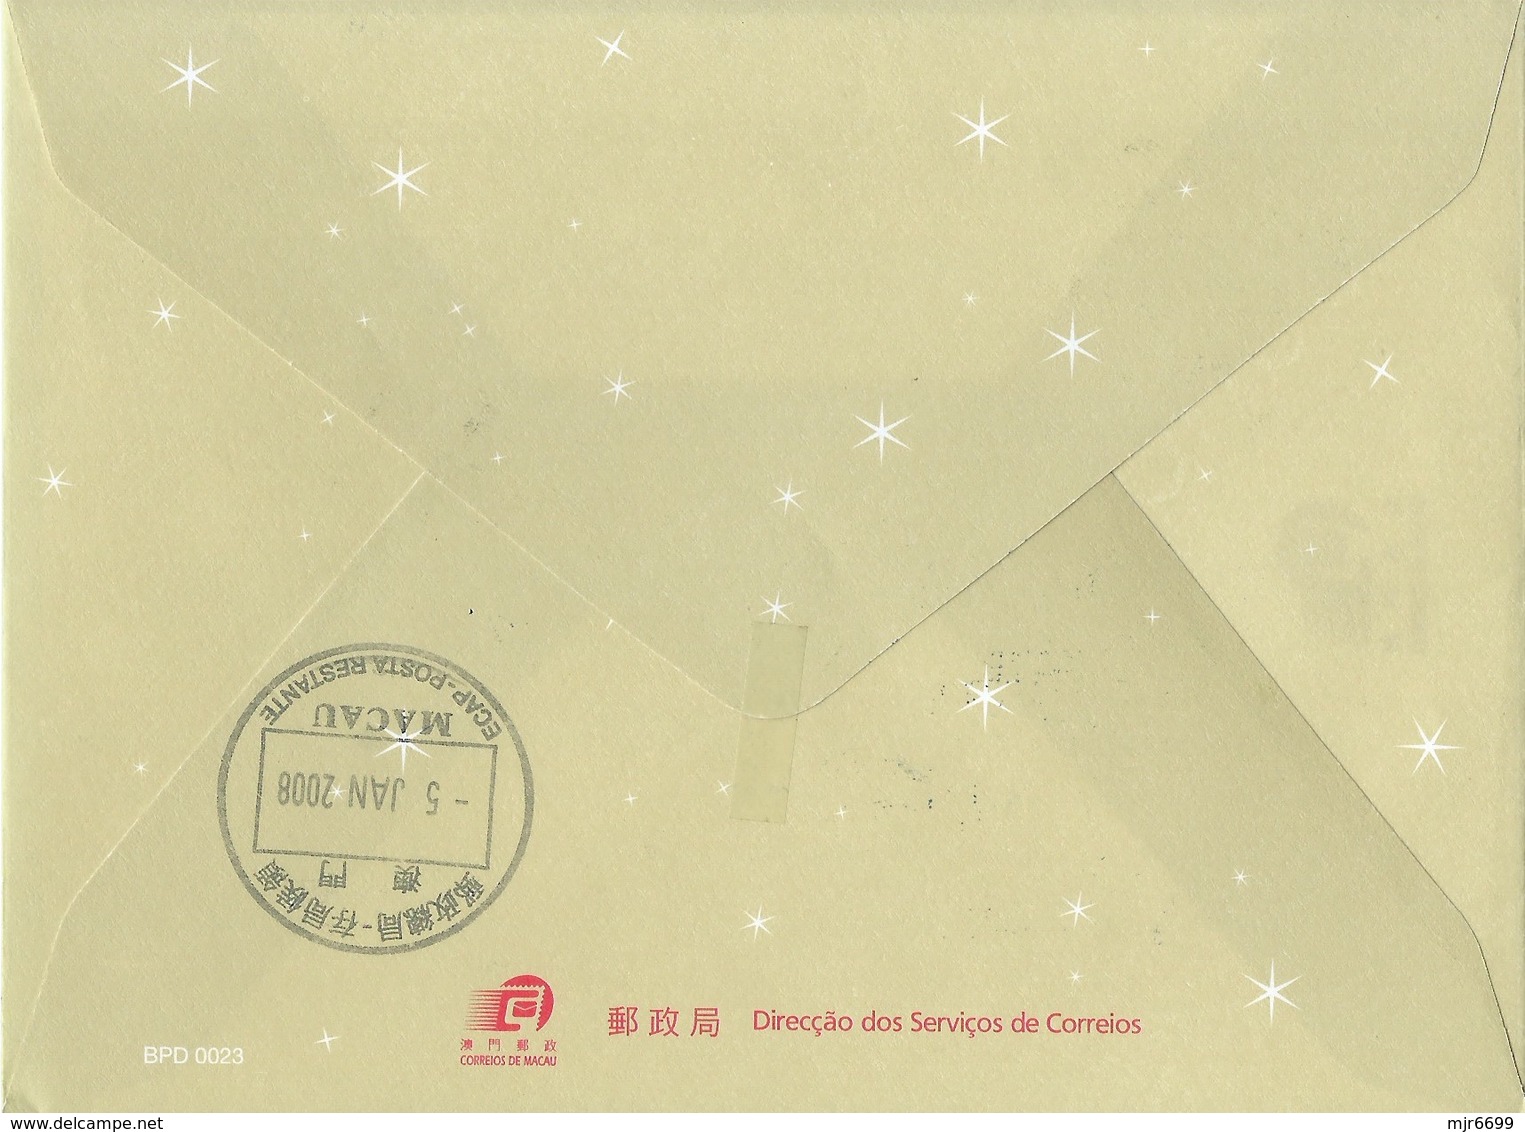 MACAU 2007 CHRISTMAS GREETING CARD & POSTAGE PAID COVER - Postal Stationery